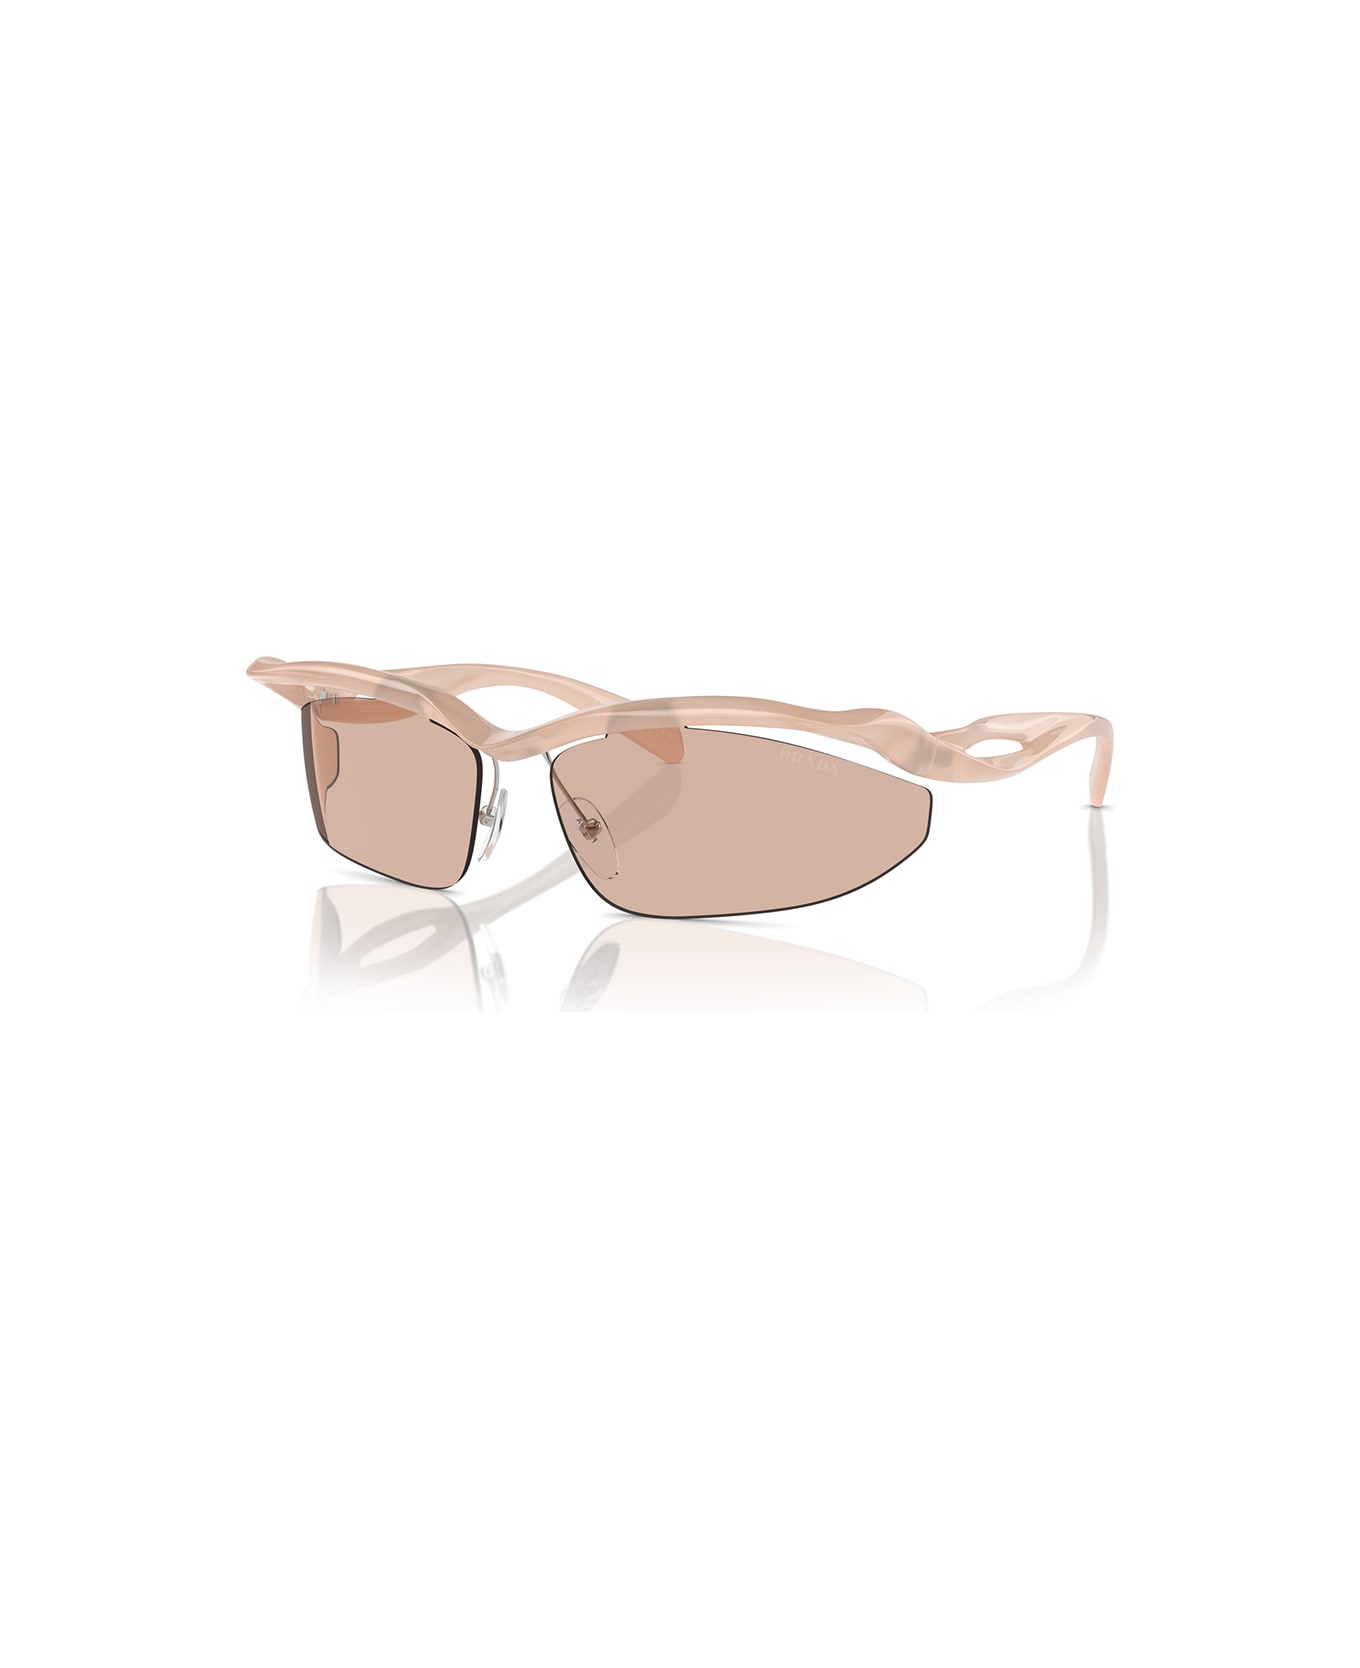 Prada Eyewear Sunglasses - Rosa/Marrone